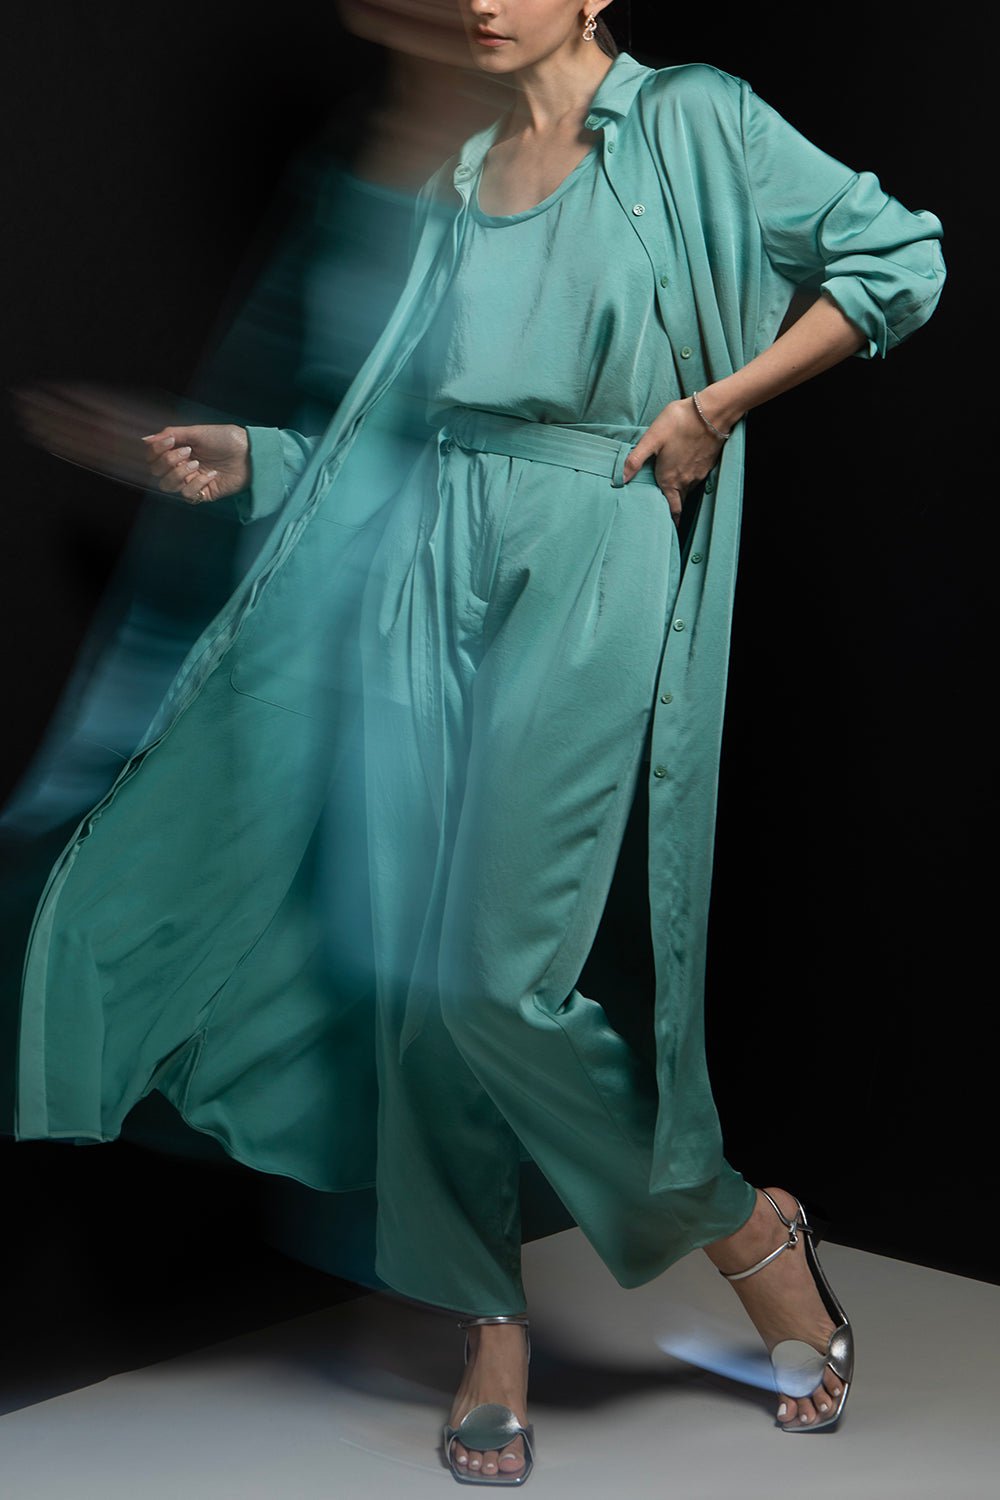 Texture Satin Button Dress - Sea Green CLOTHINGDRESSCASUAL LAPOINTE   